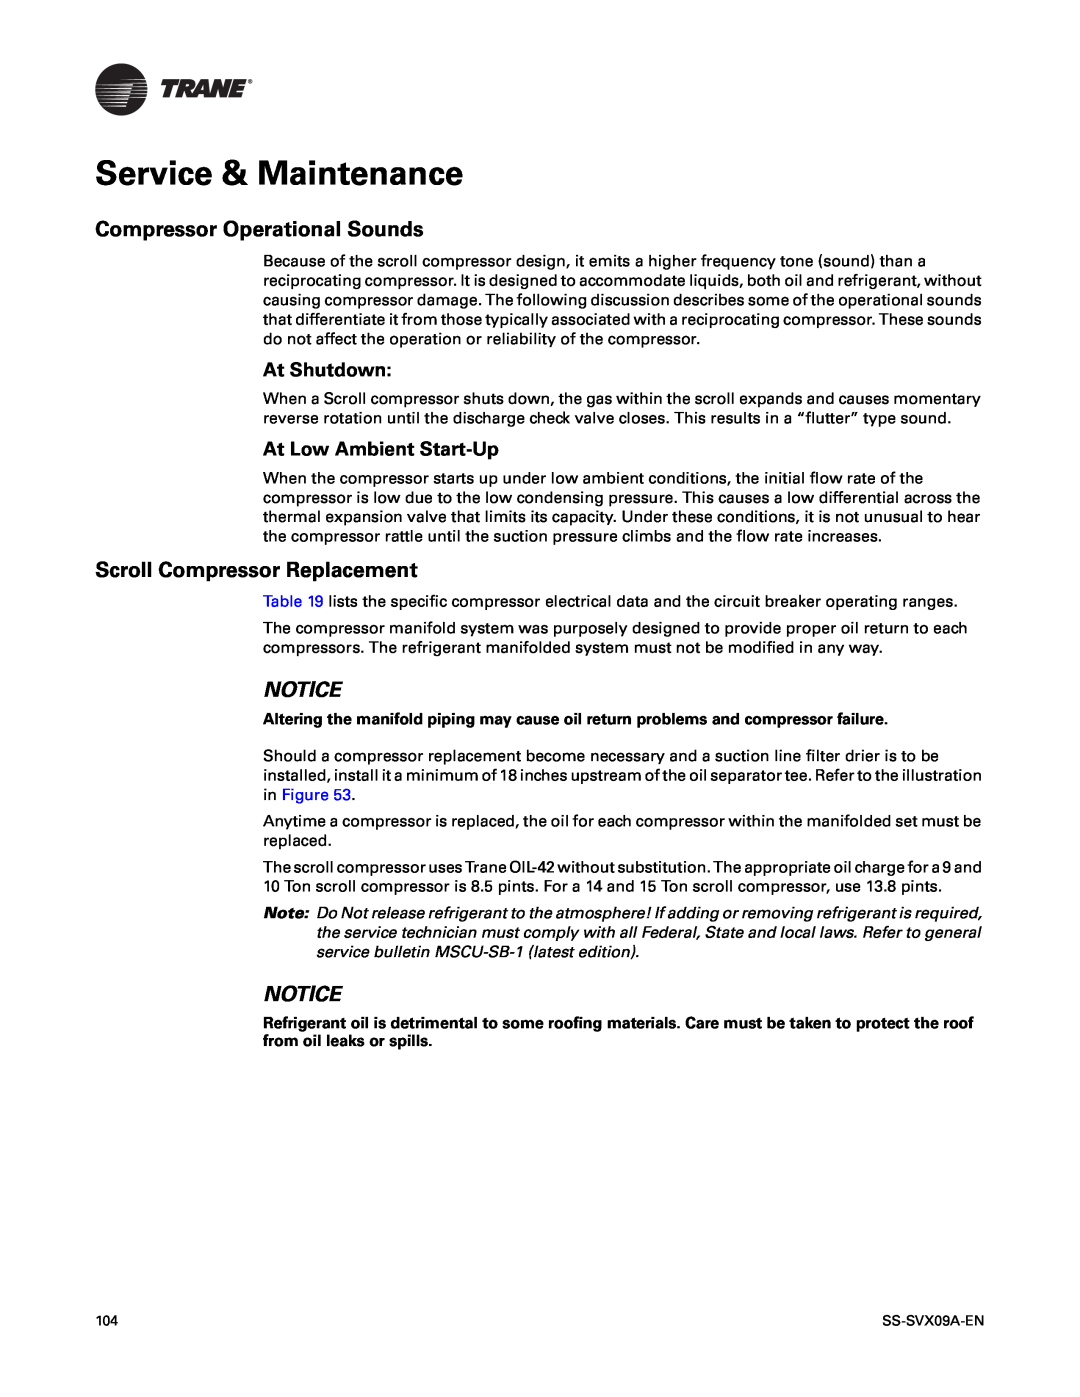 Trane RAUC-C60 Service & Maintenance, Compressor Operational Sounds, Scroll Compressor Replacement, At Shutdown, Notice 